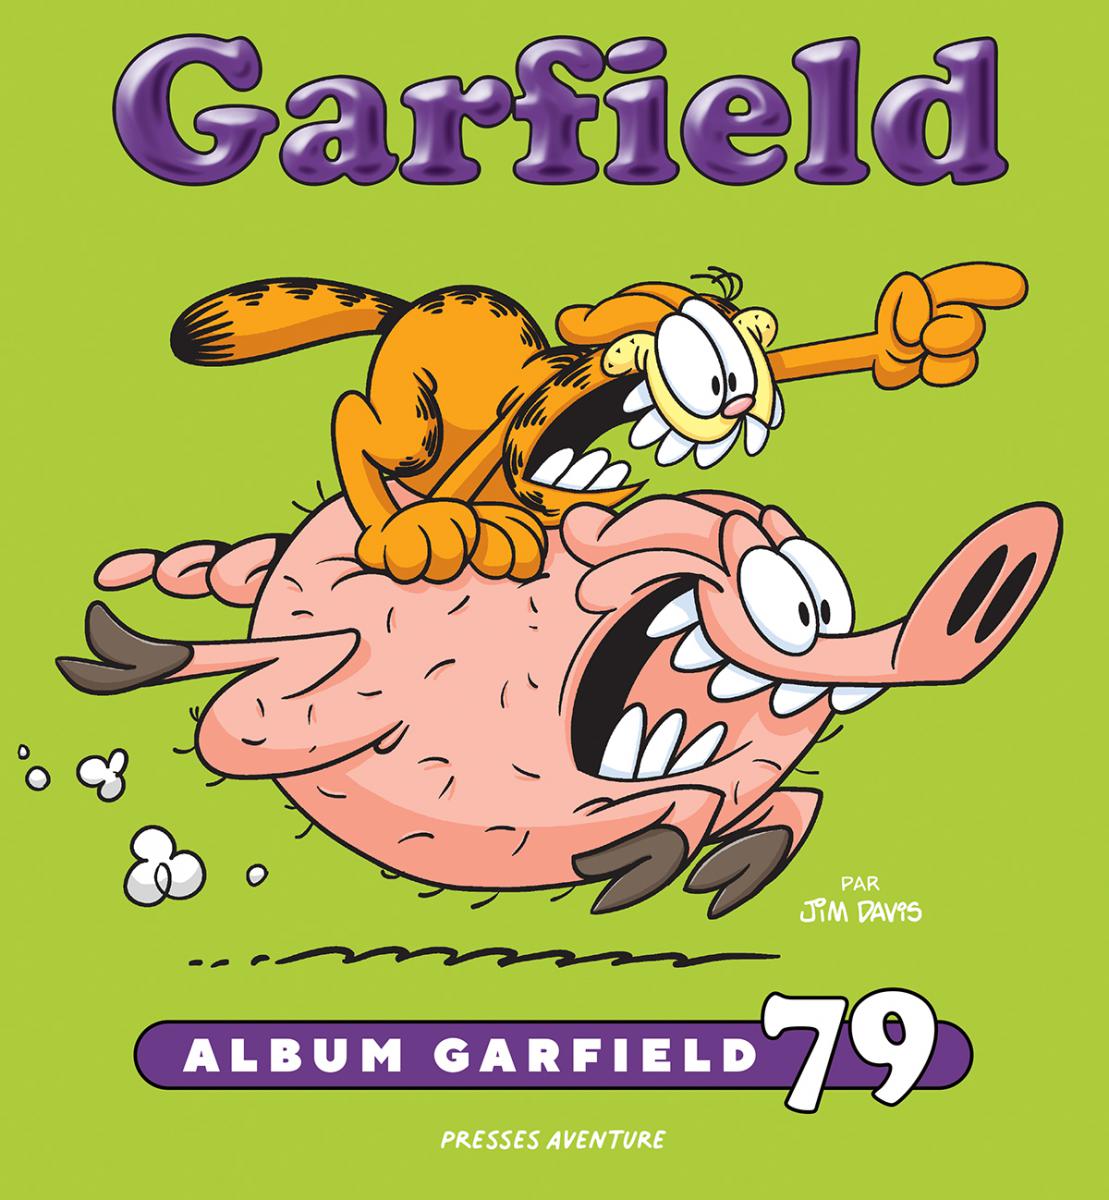  Garfield no 79 